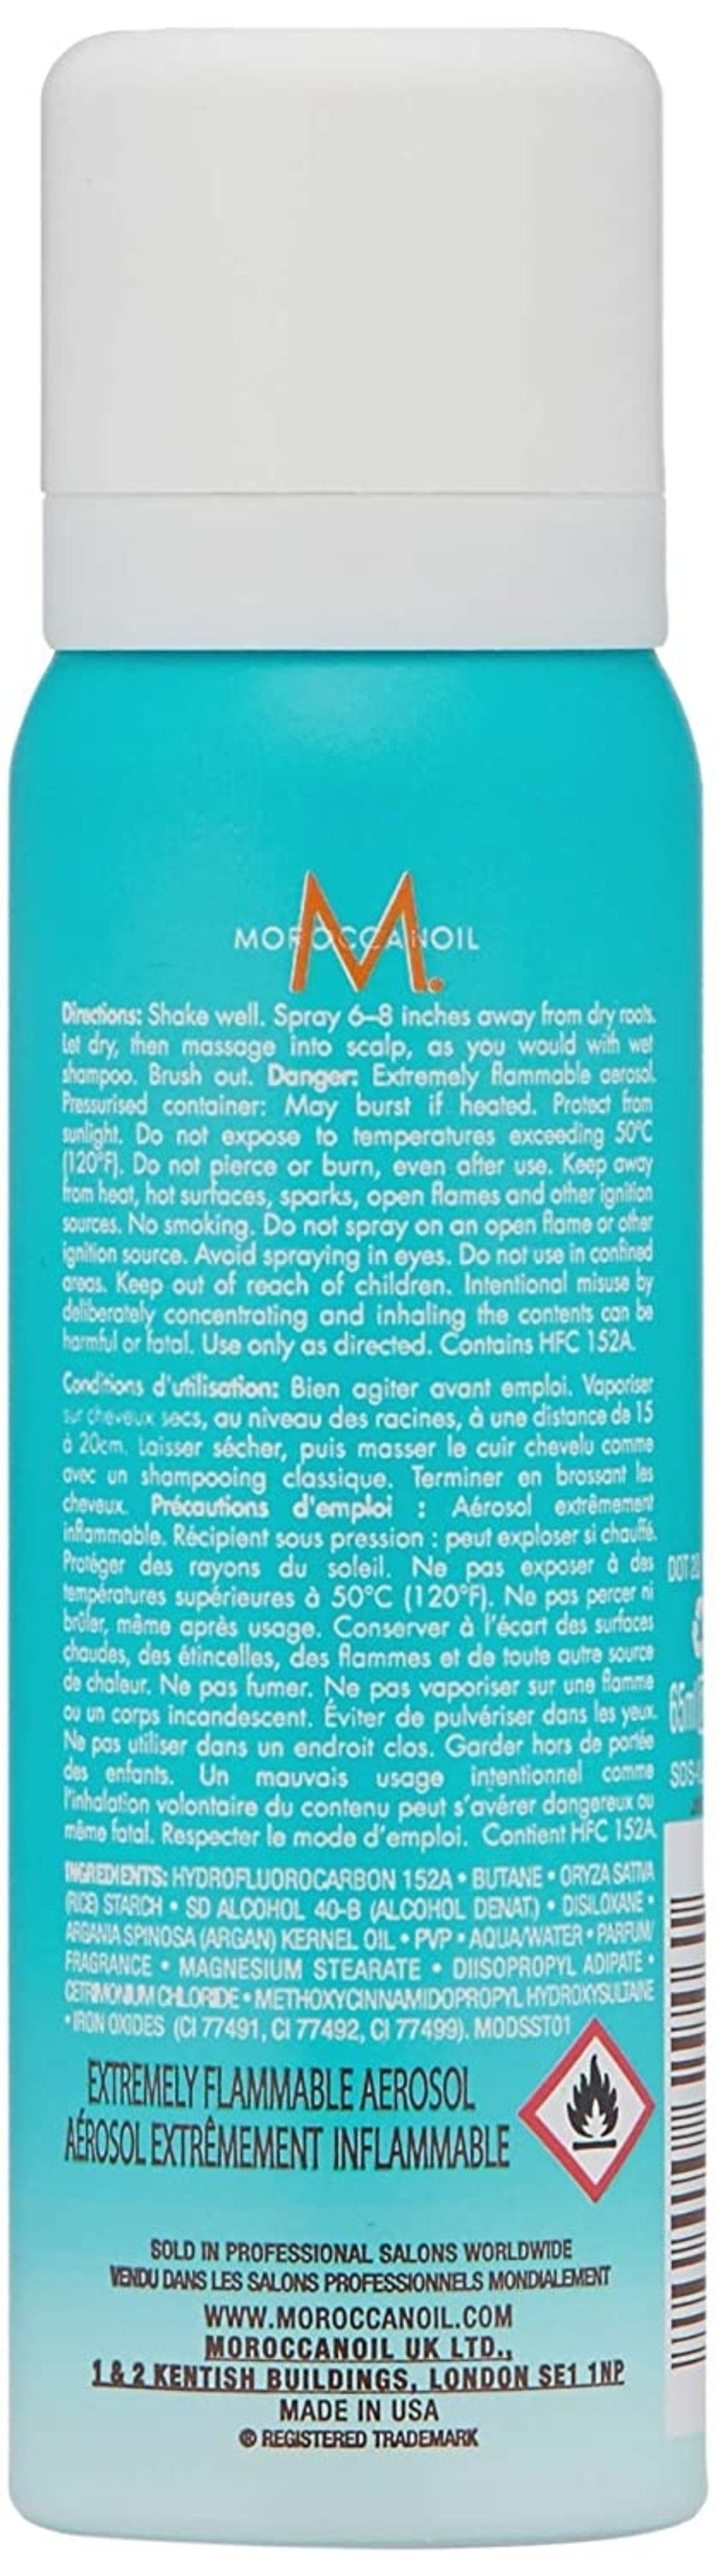 Friseurmeister Trockenshampoo »Moroccanoil Trockenshampoo für dunkles Haar  - shampoo dry trocken« online kaufen | OTTO